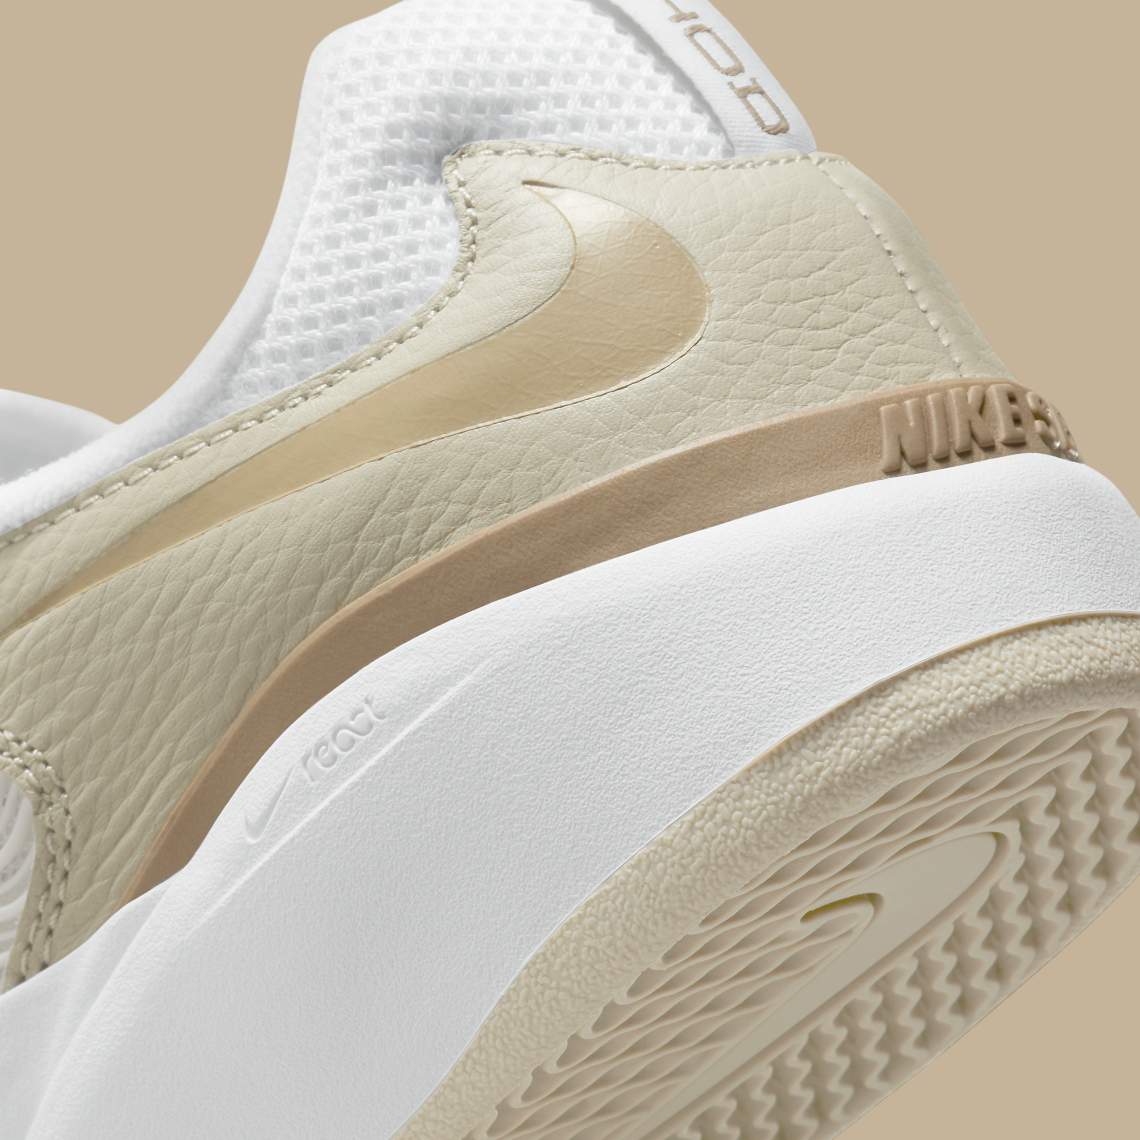 Nike SB Ishod White Beige DH1030-100 Release | SneakerNews.com